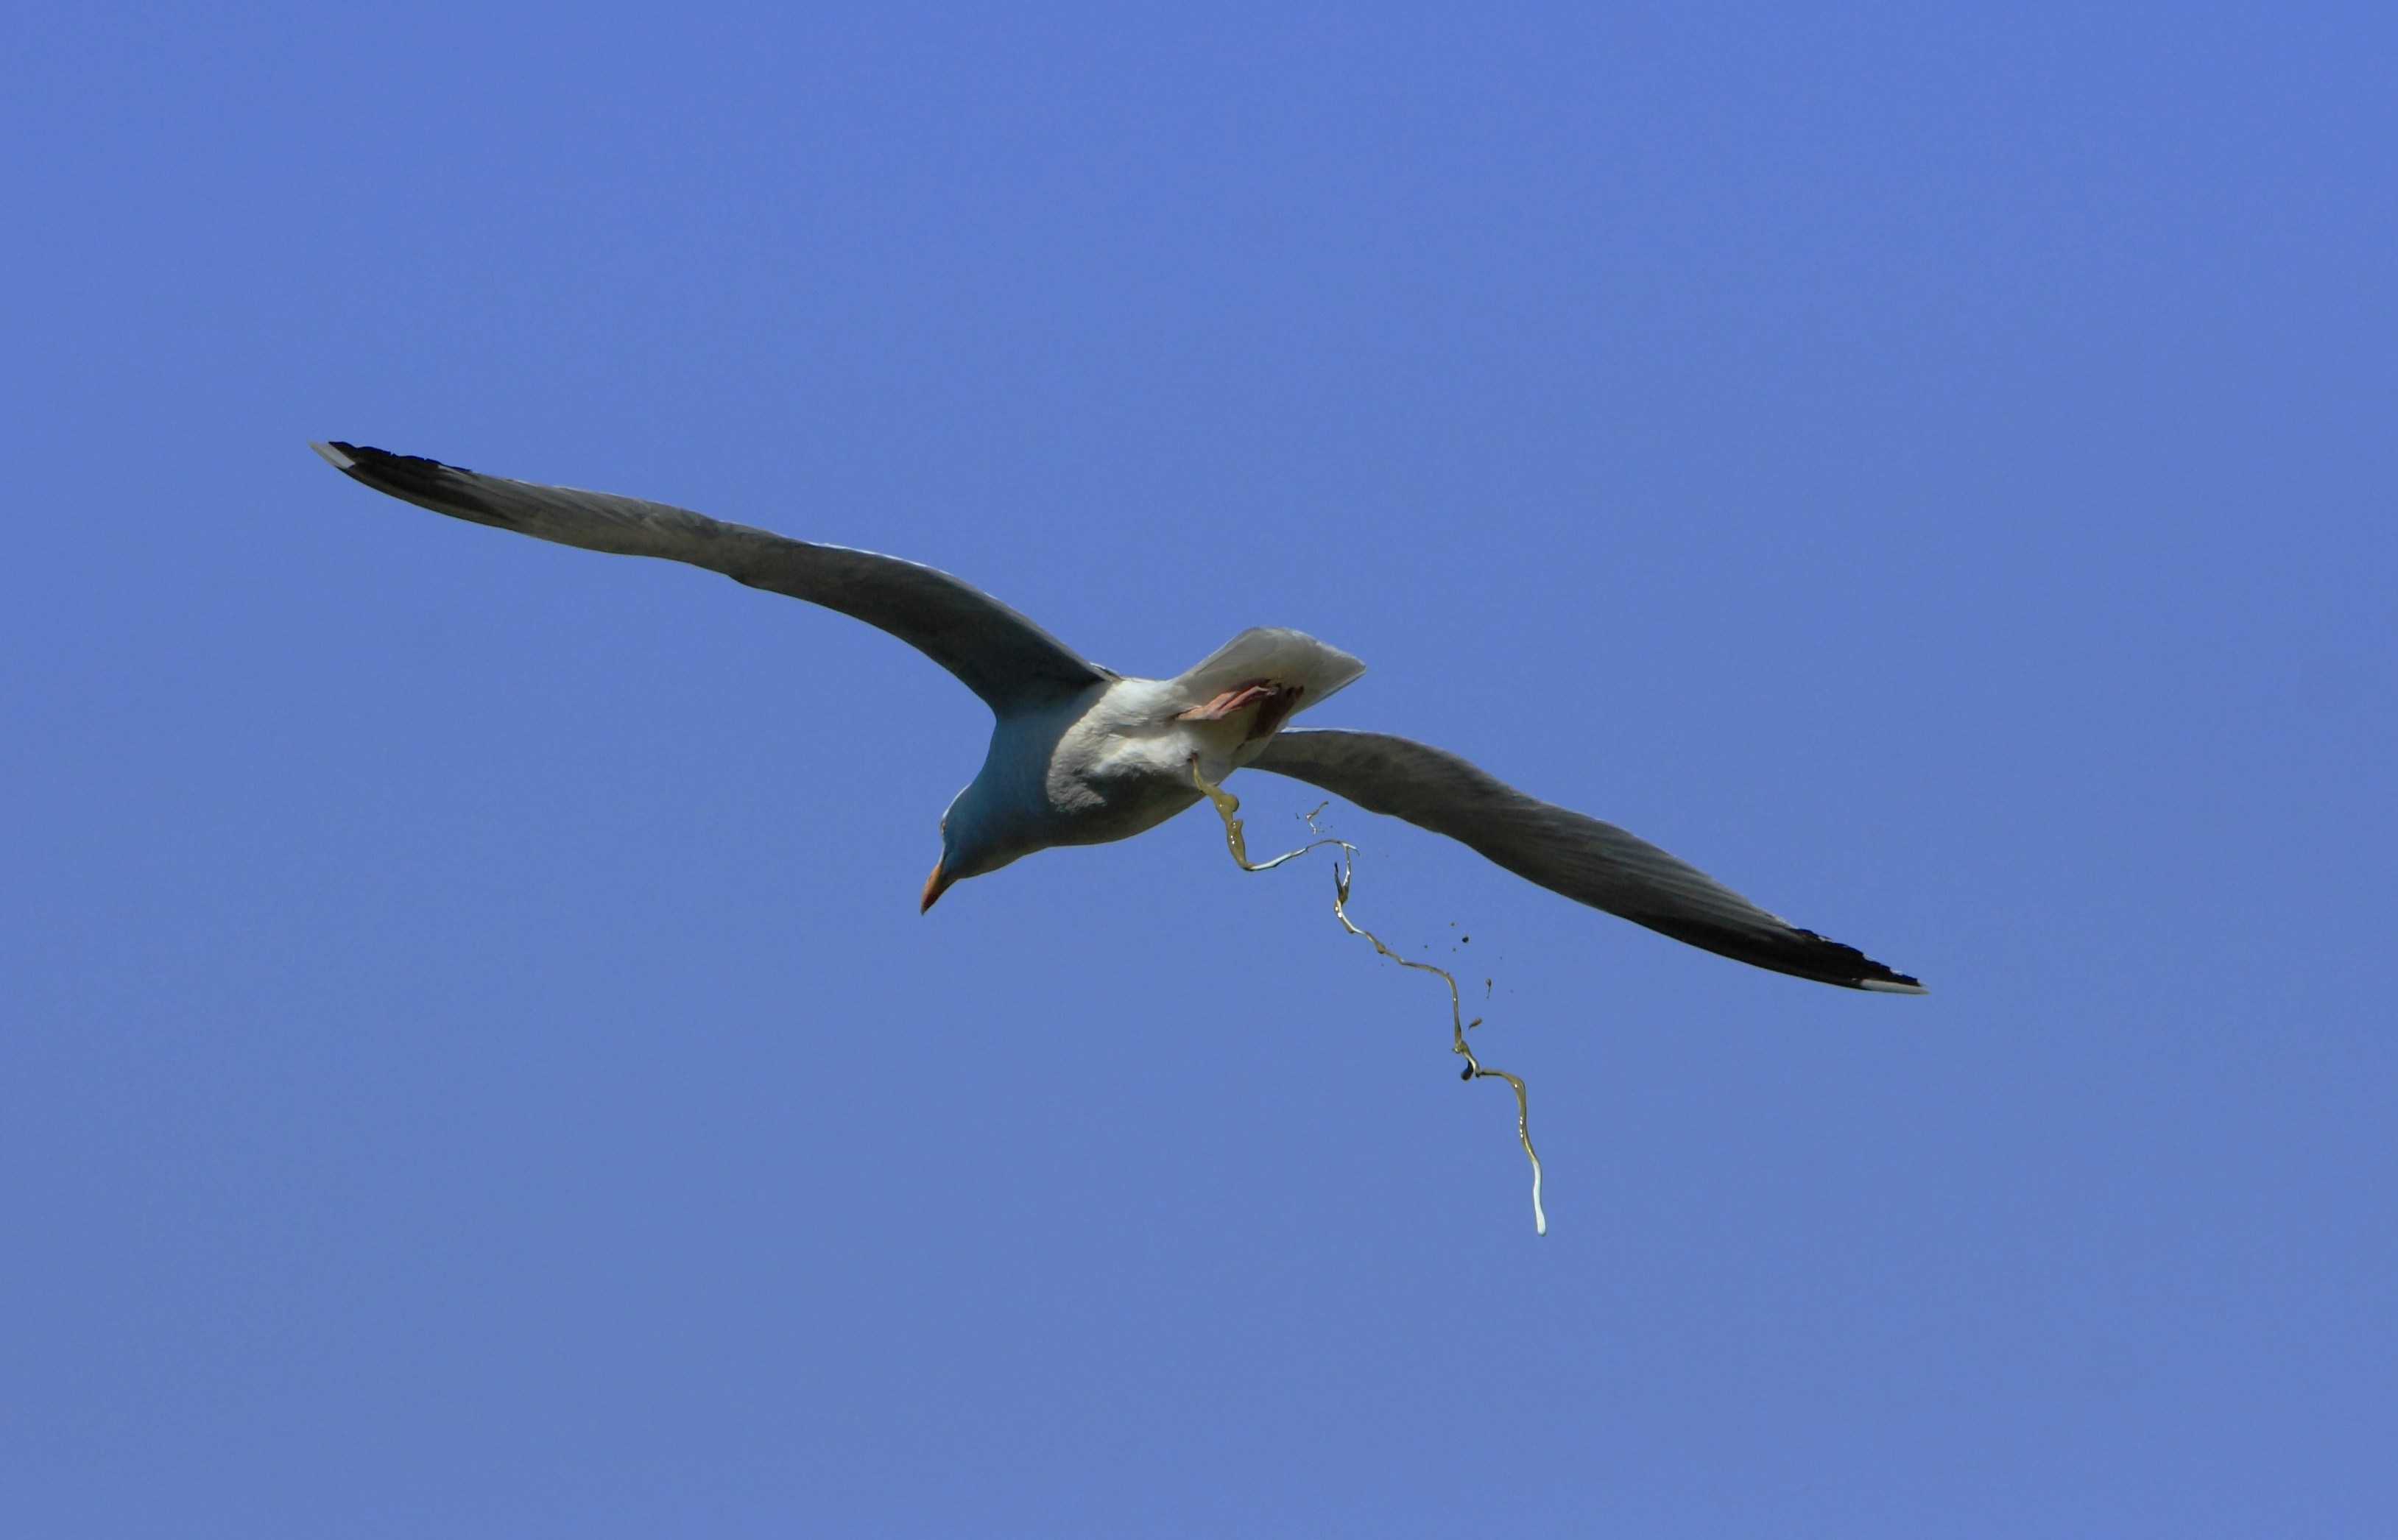 Herring gull pooping mid-flight. Image courtesy Wikimedia Commons.